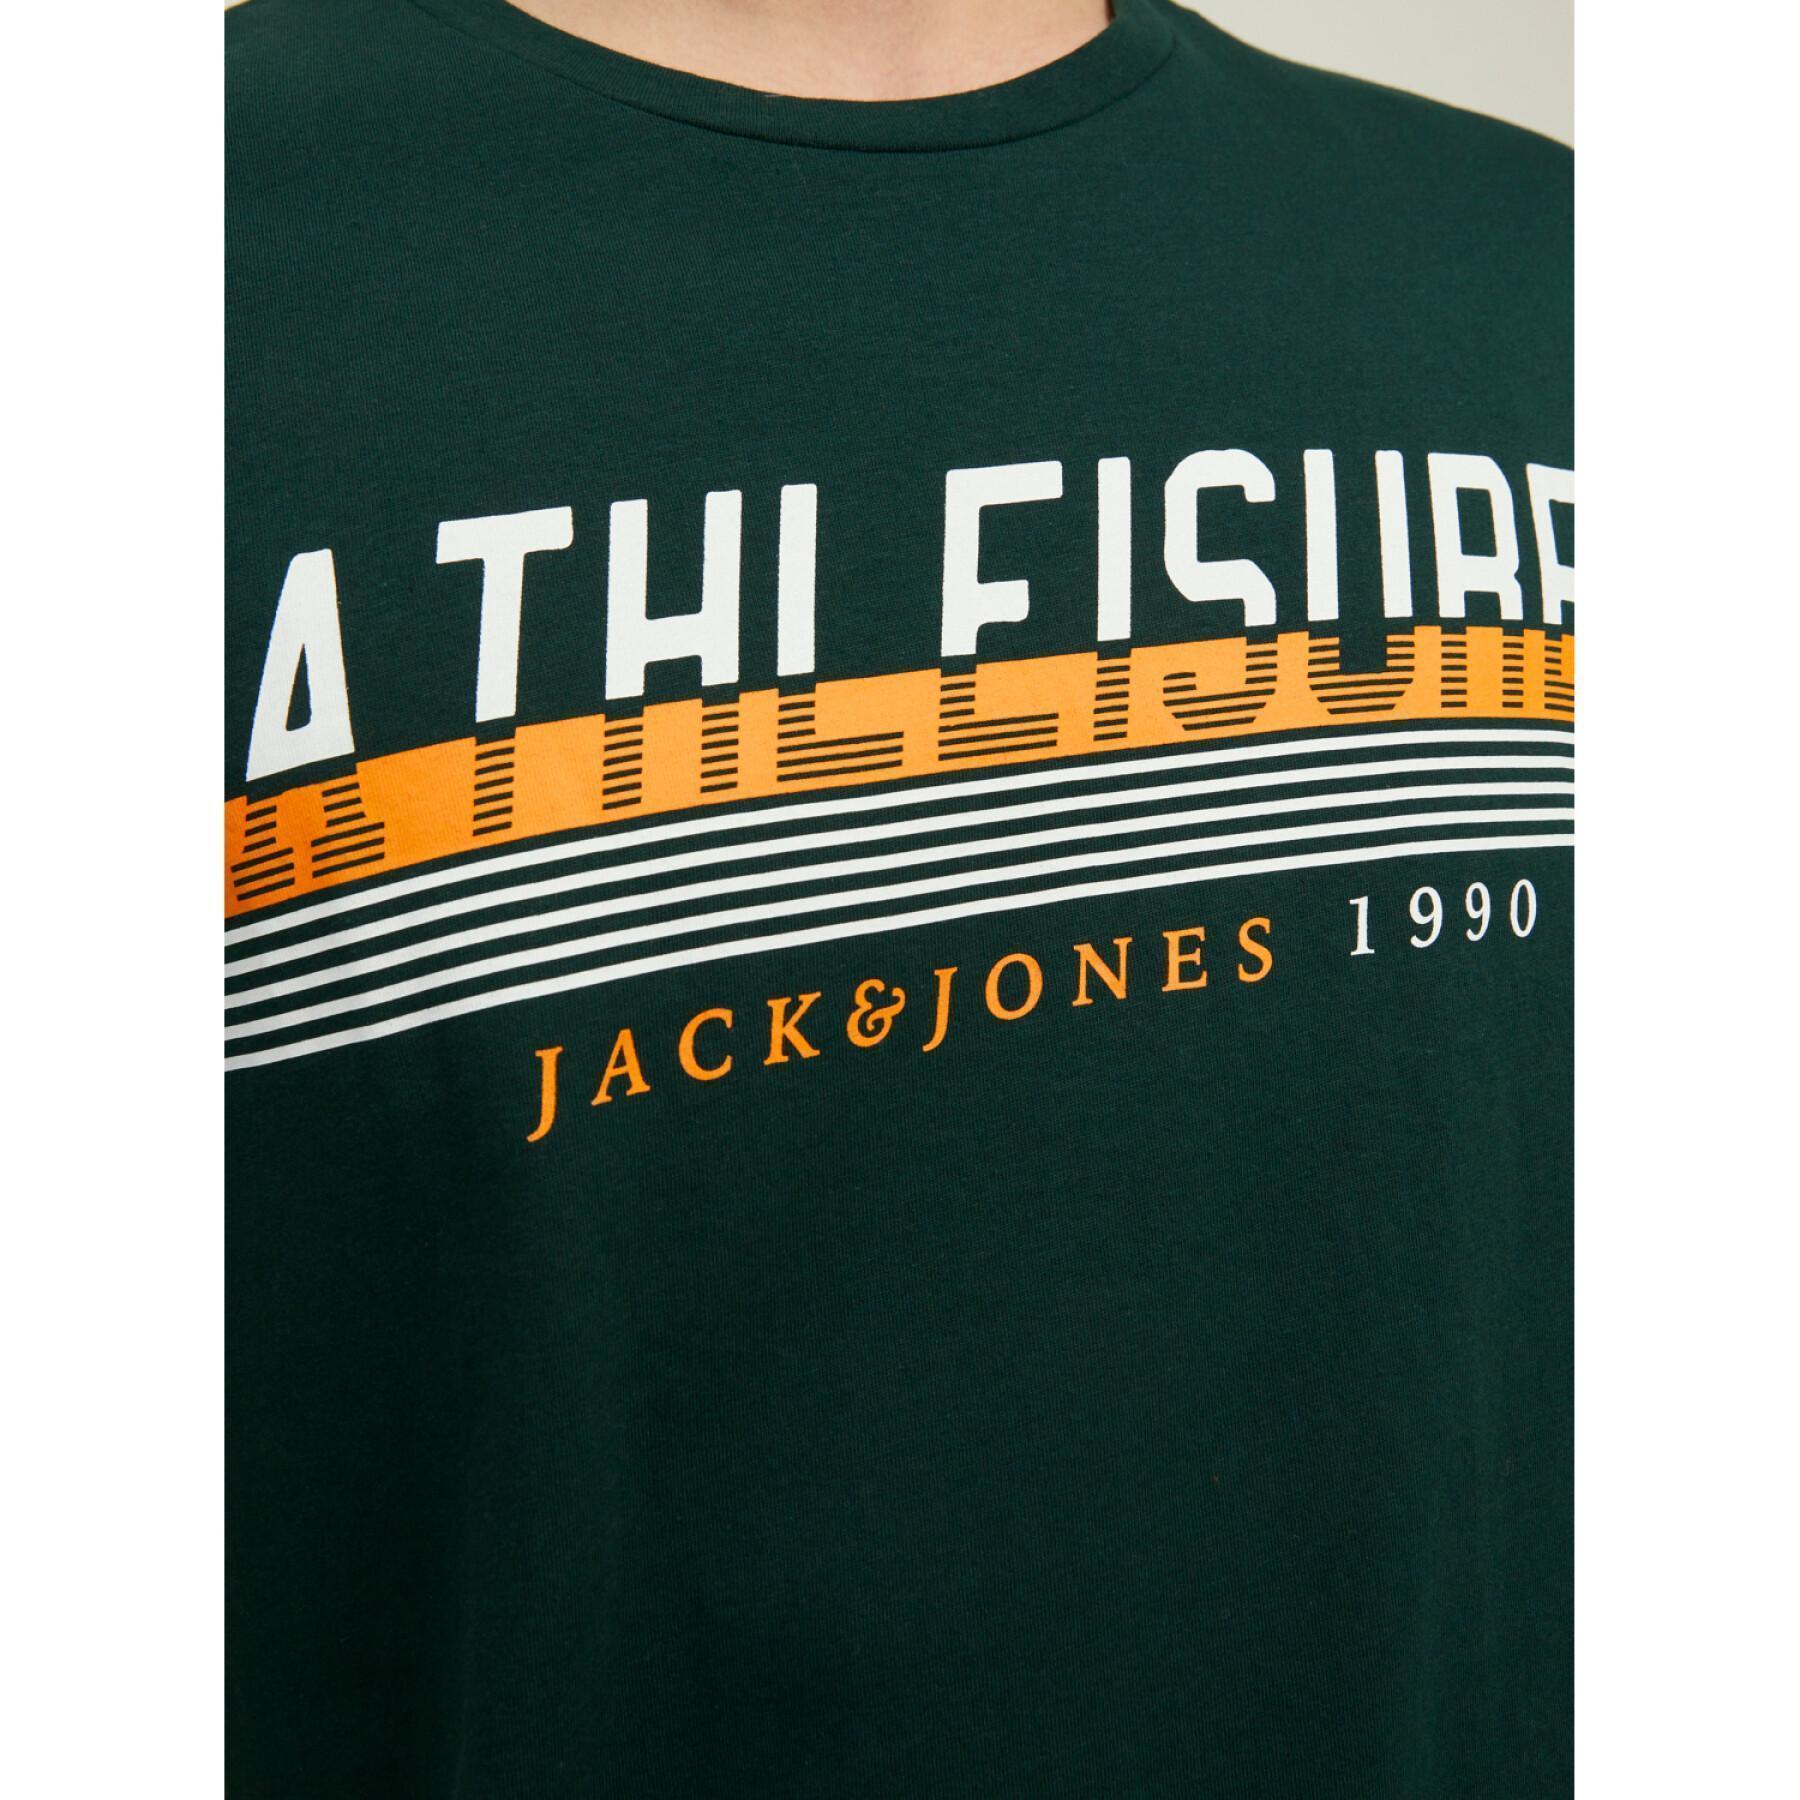 Camiseta cuello redondo Jack & Jones Jjiron